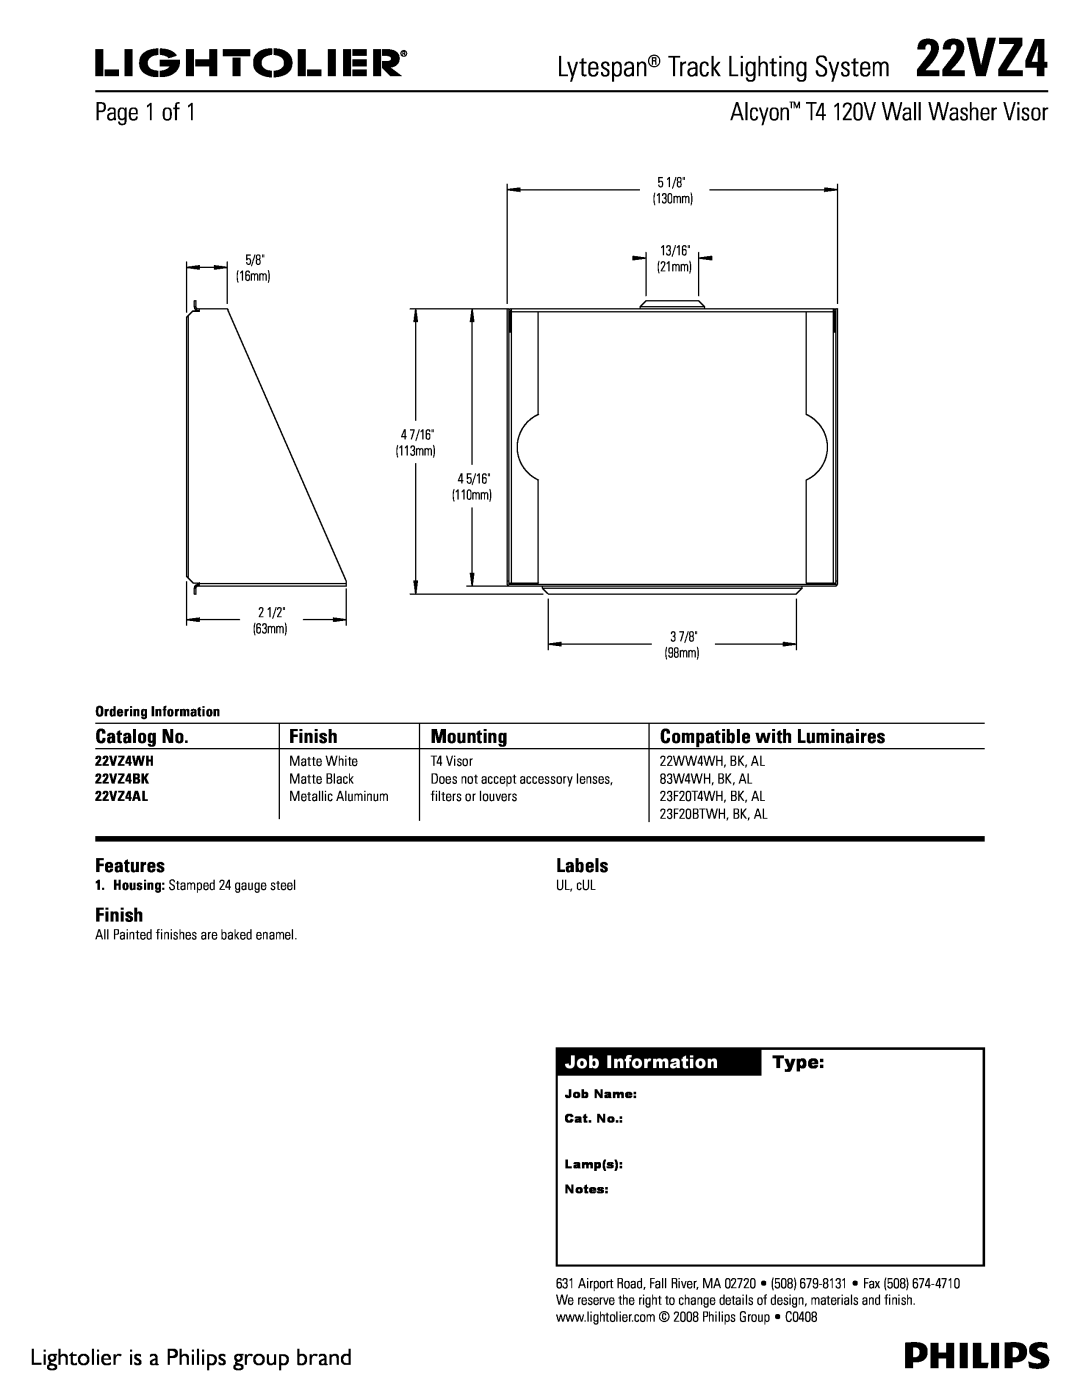 Lightolier manual Lytespan Track Lighting System22VZ4, Page of, Alcyon T4 120V Wall Washer Visor, Catalog No, Finish 